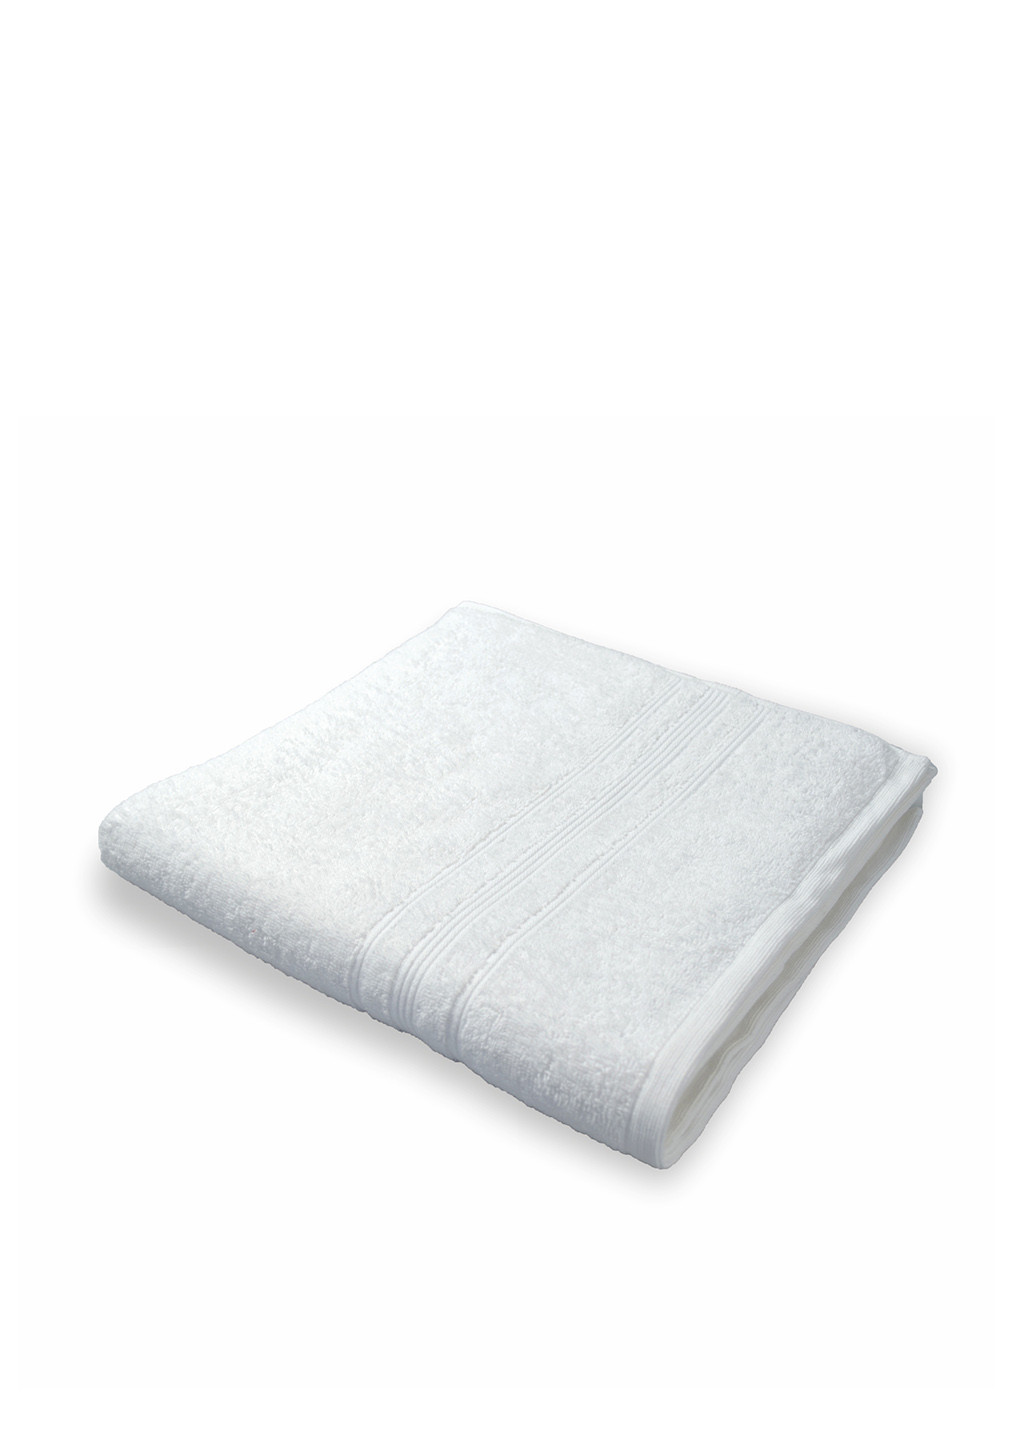 No Brand полотенце, 70х140 см однотонный белый производство - Индия